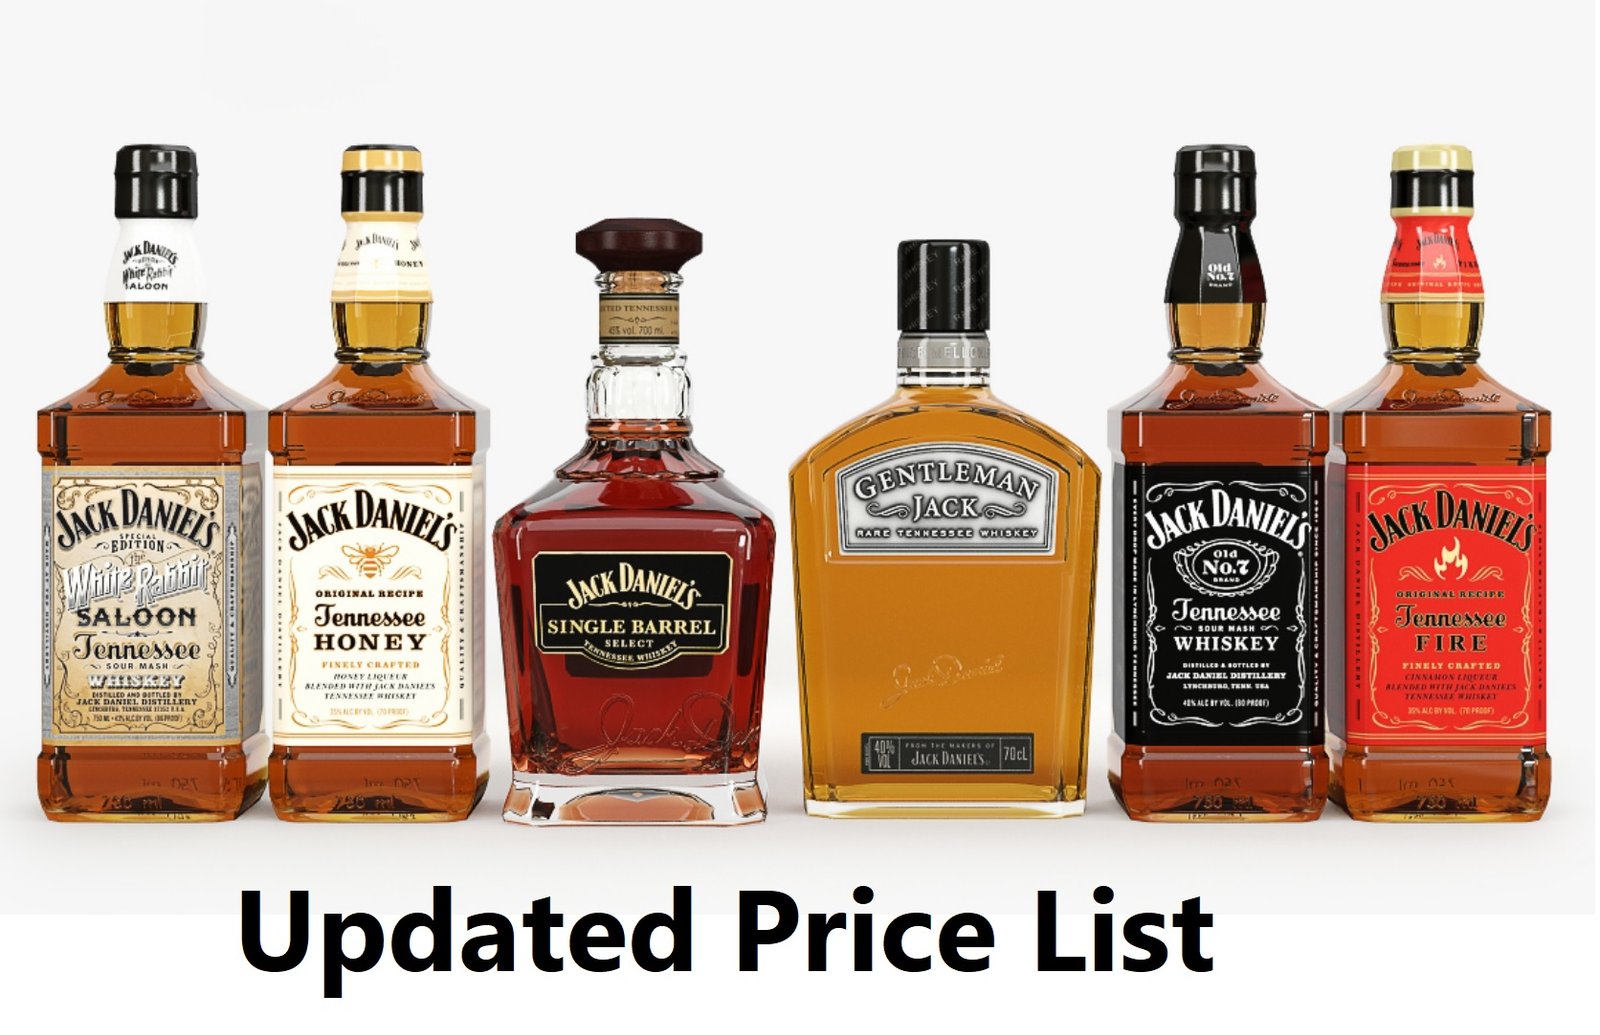 Jack Daniel's Tennessee Honey, 1L, 70 Proof